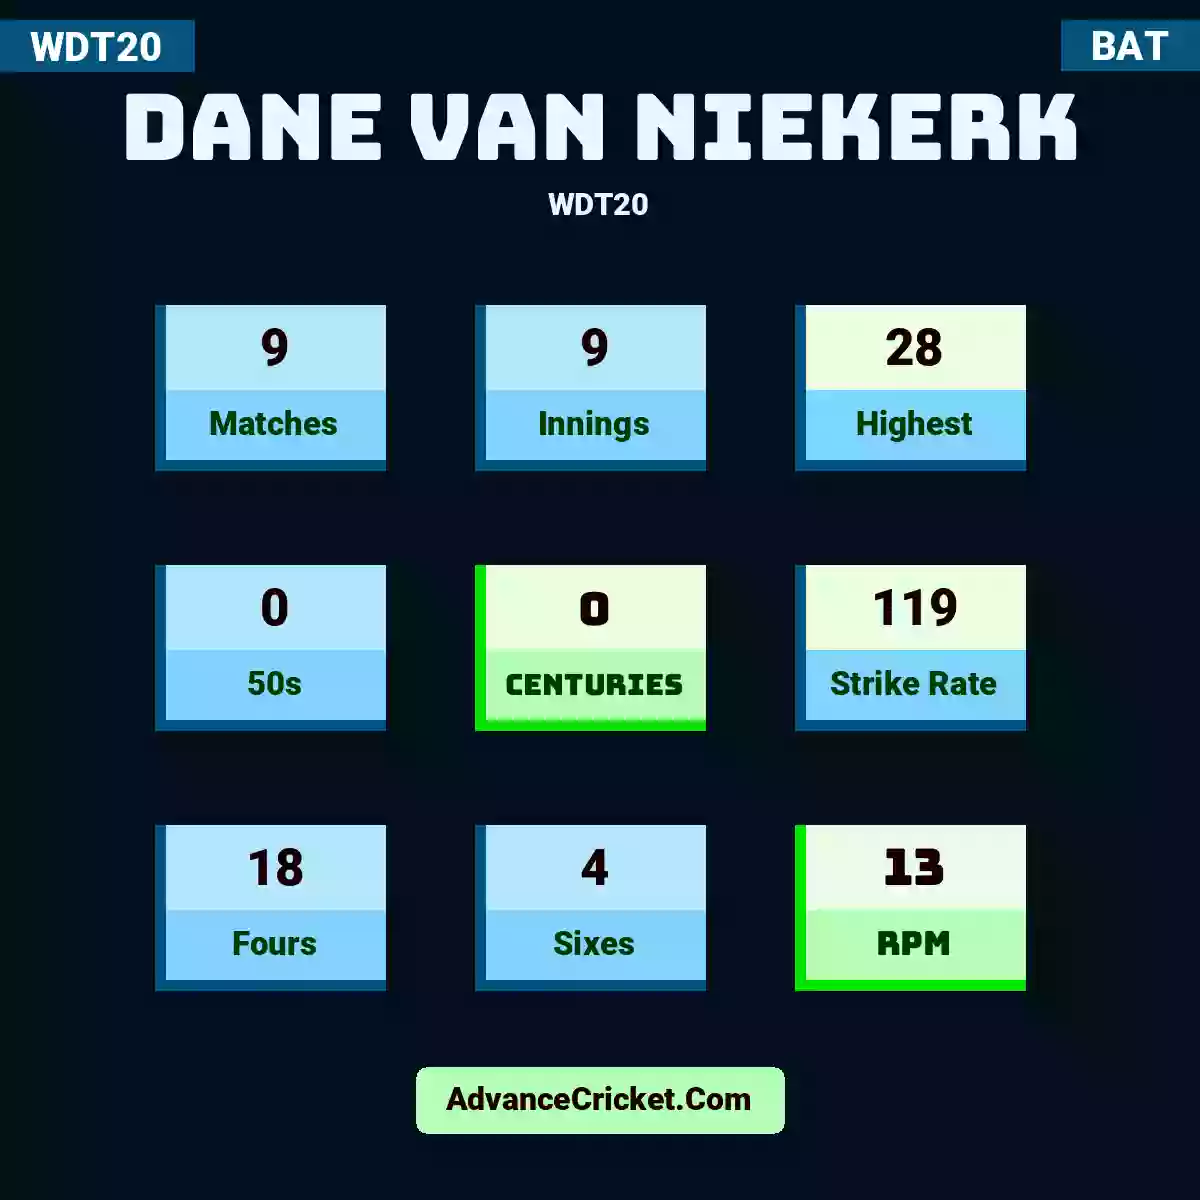 Dane van Niekerk WDT20 , Dane van Niekerk played 9 matches, scored 28 runs as highest, 0 half-centuries, and 0 centuries, with a strike rate of 119. D.Niekerk hit 18 fours and 4 sixes, with an RPM of 13.